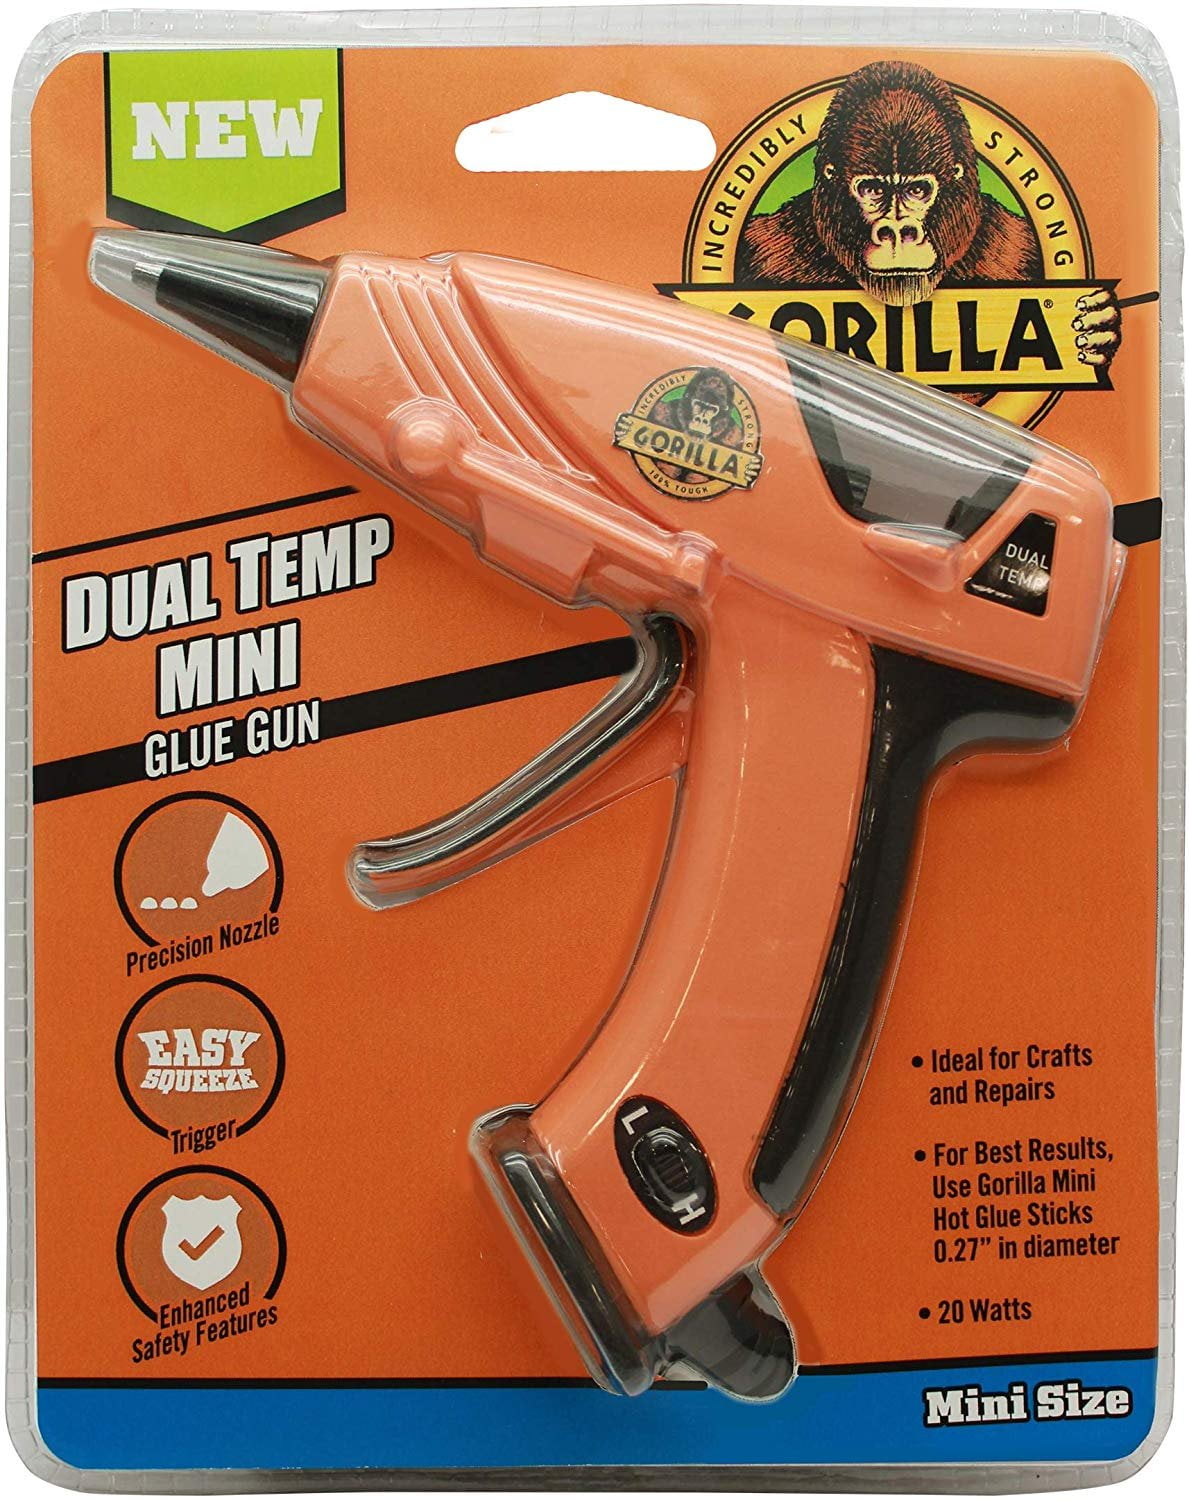 Dual-Temp Full Size Glue Gun Kit Mini Size - 018239335749